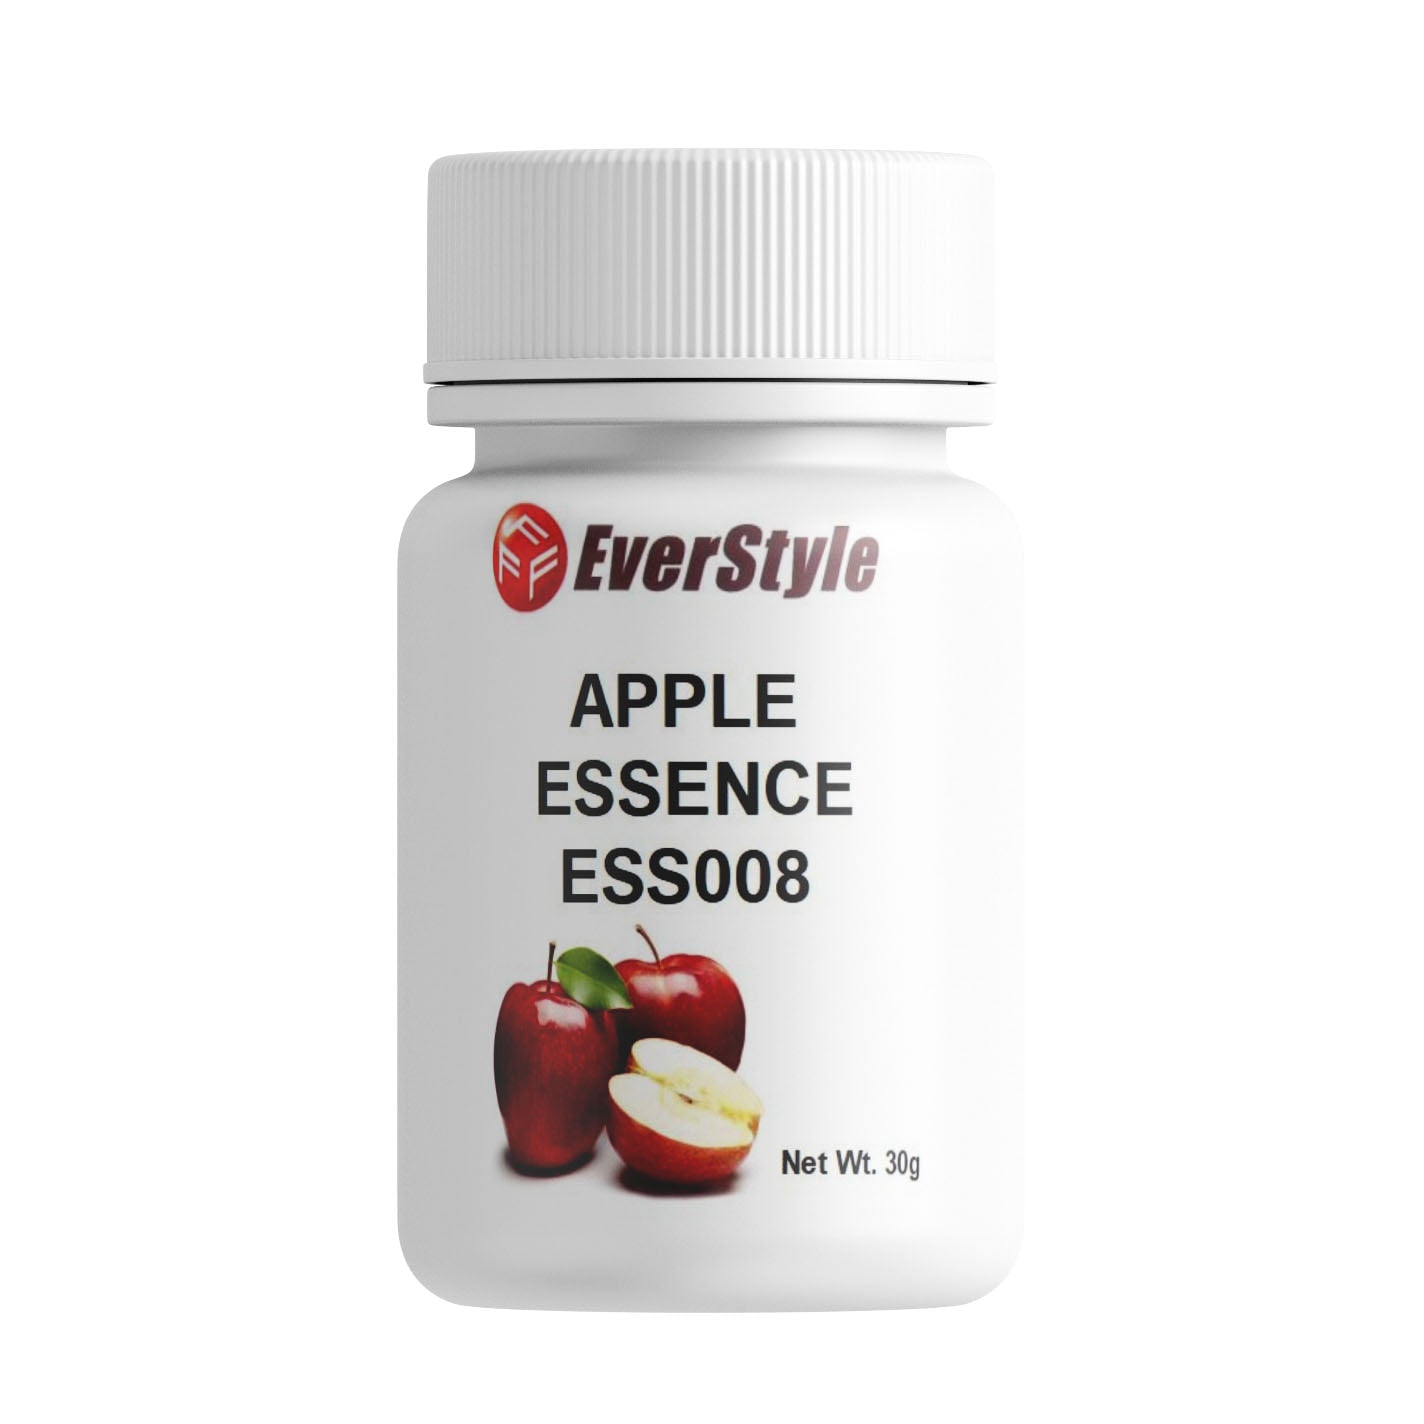 Everstyle Apple Essence 30g (ESS008) 